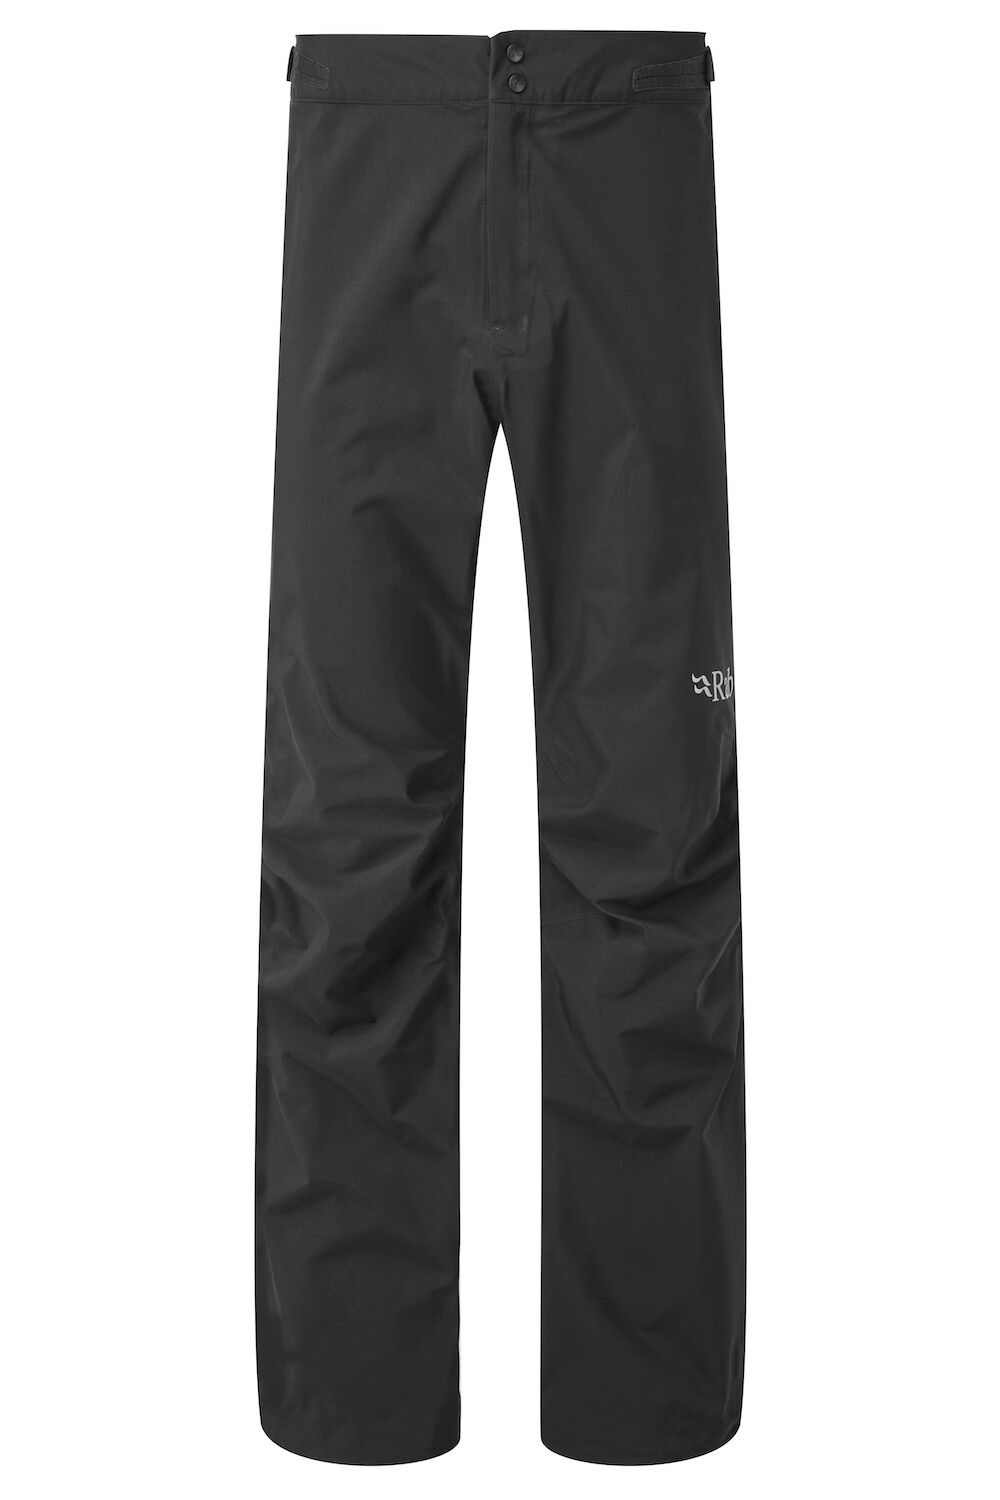 Rab Kangri GTX Pants - pantaloni impermeabili - Uomo